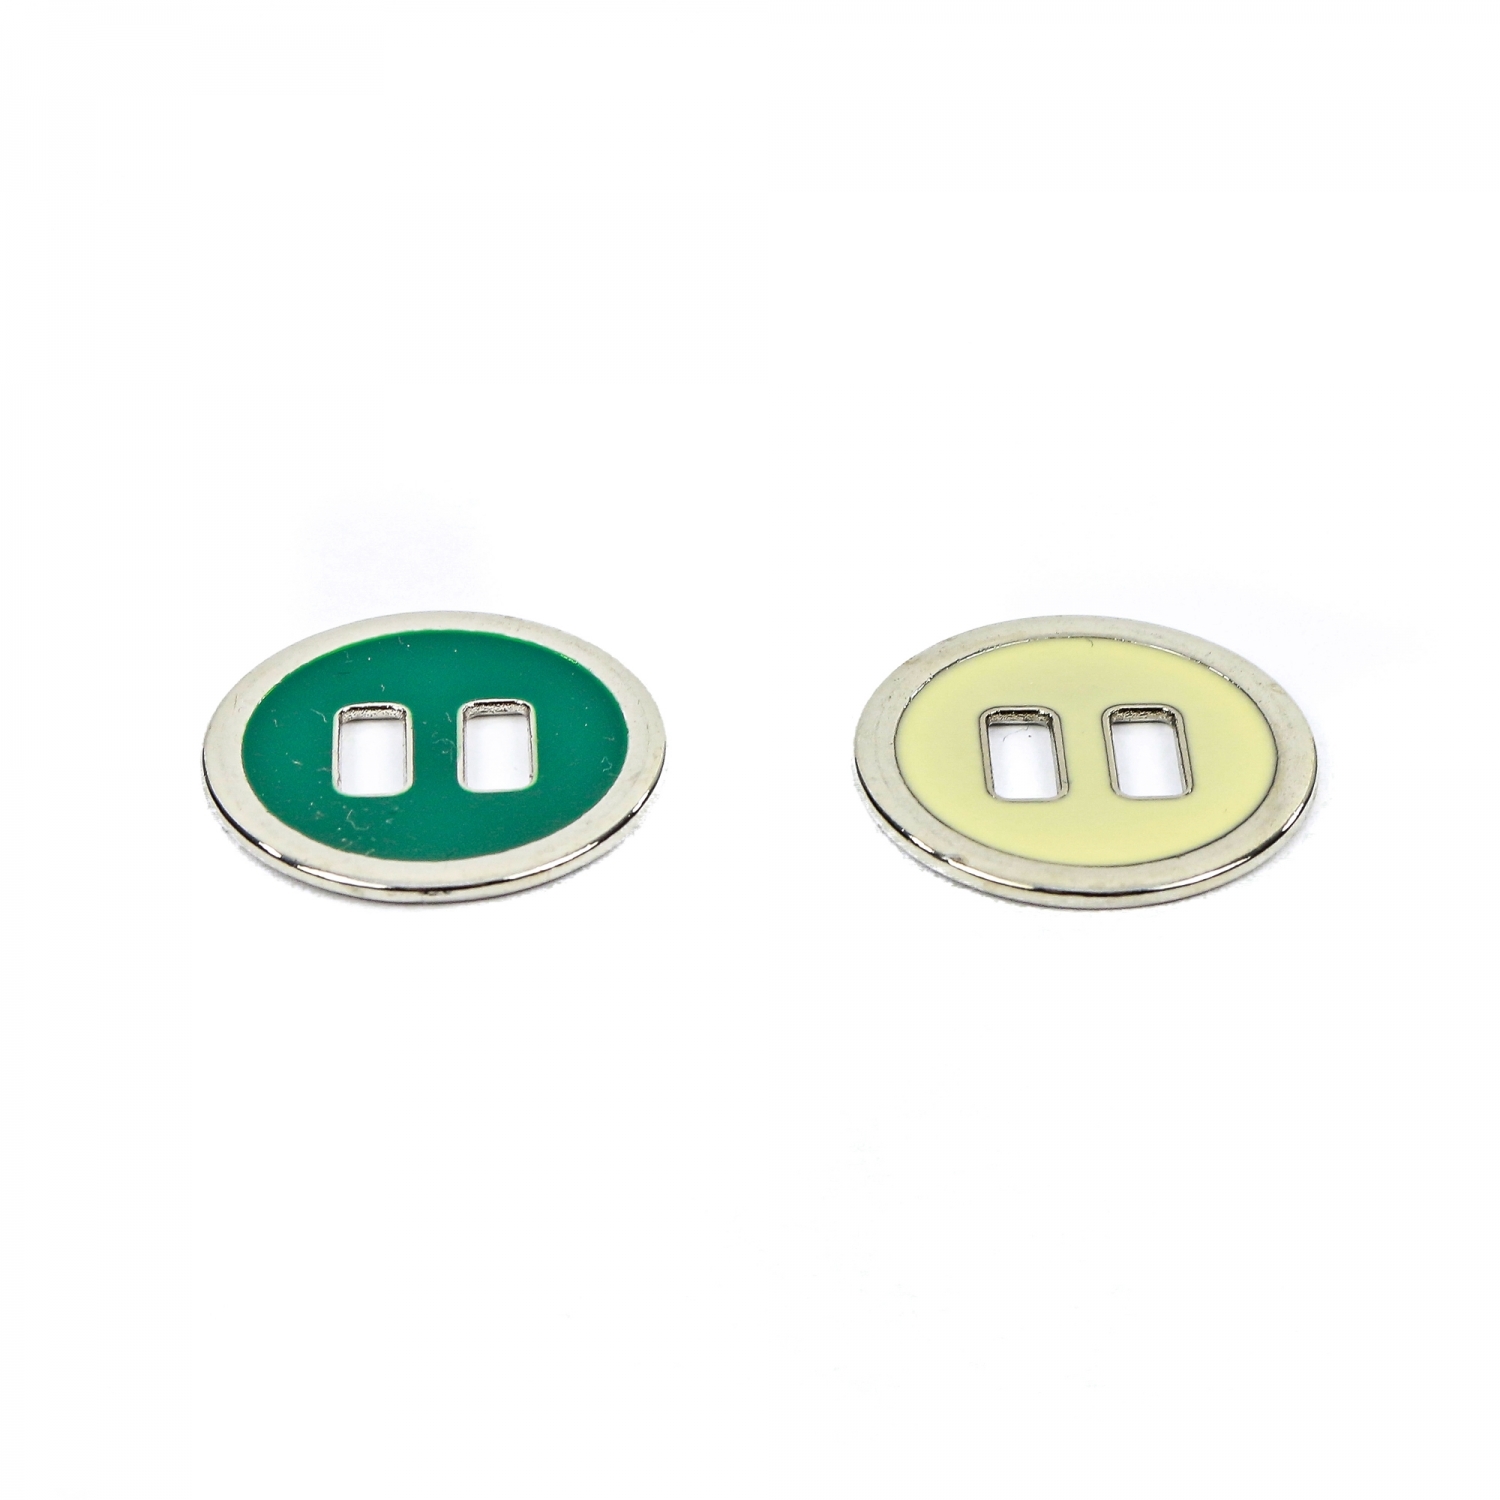 2 Holes Buttons, 25.4 mm (50 pcs/pack)Code: 1859Z/40